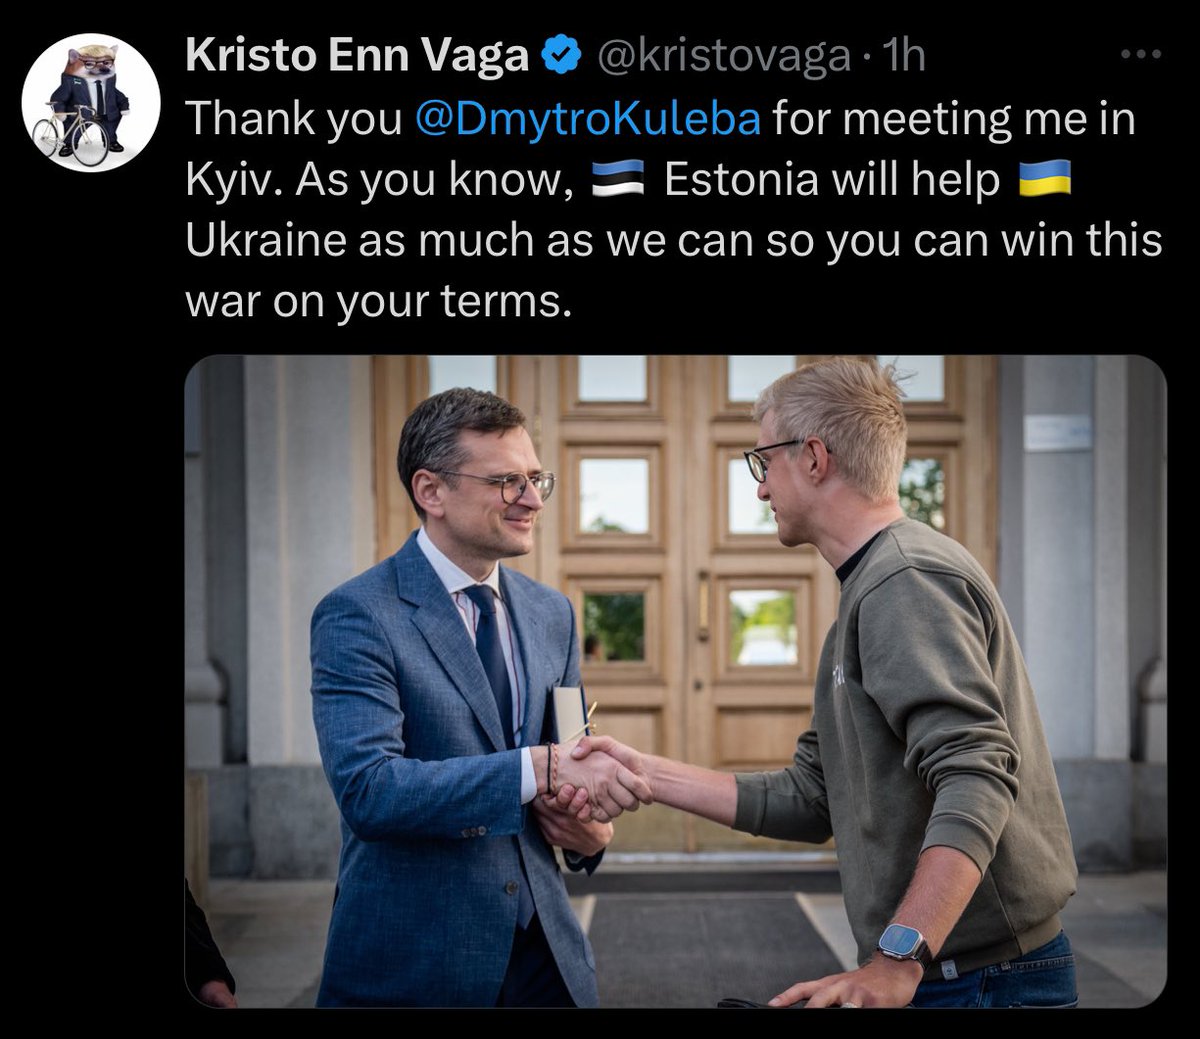 Estonia will help Ukraine win this war 🤣